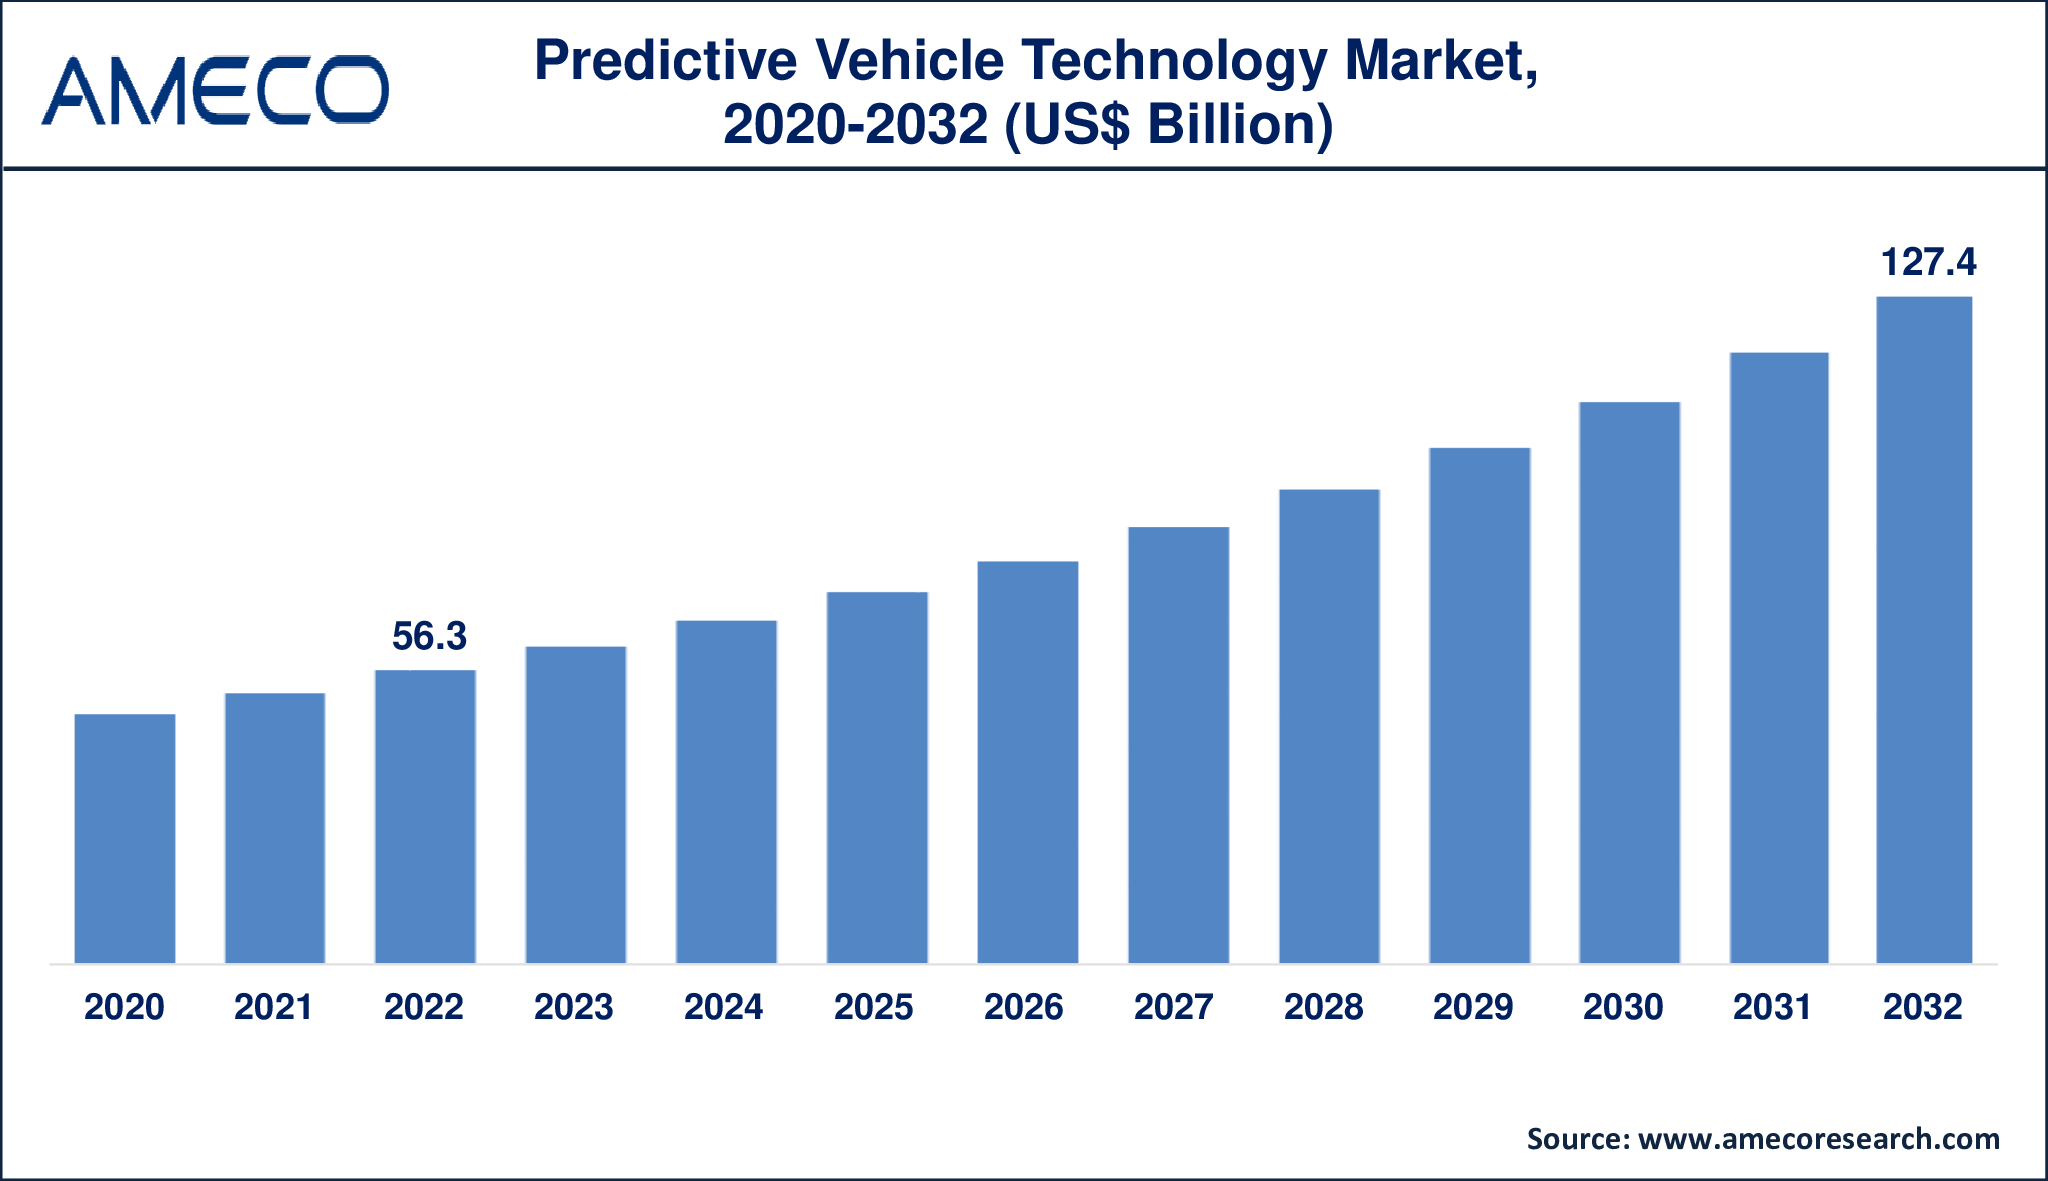 Predictive Vehicle Technology Market Dynamics